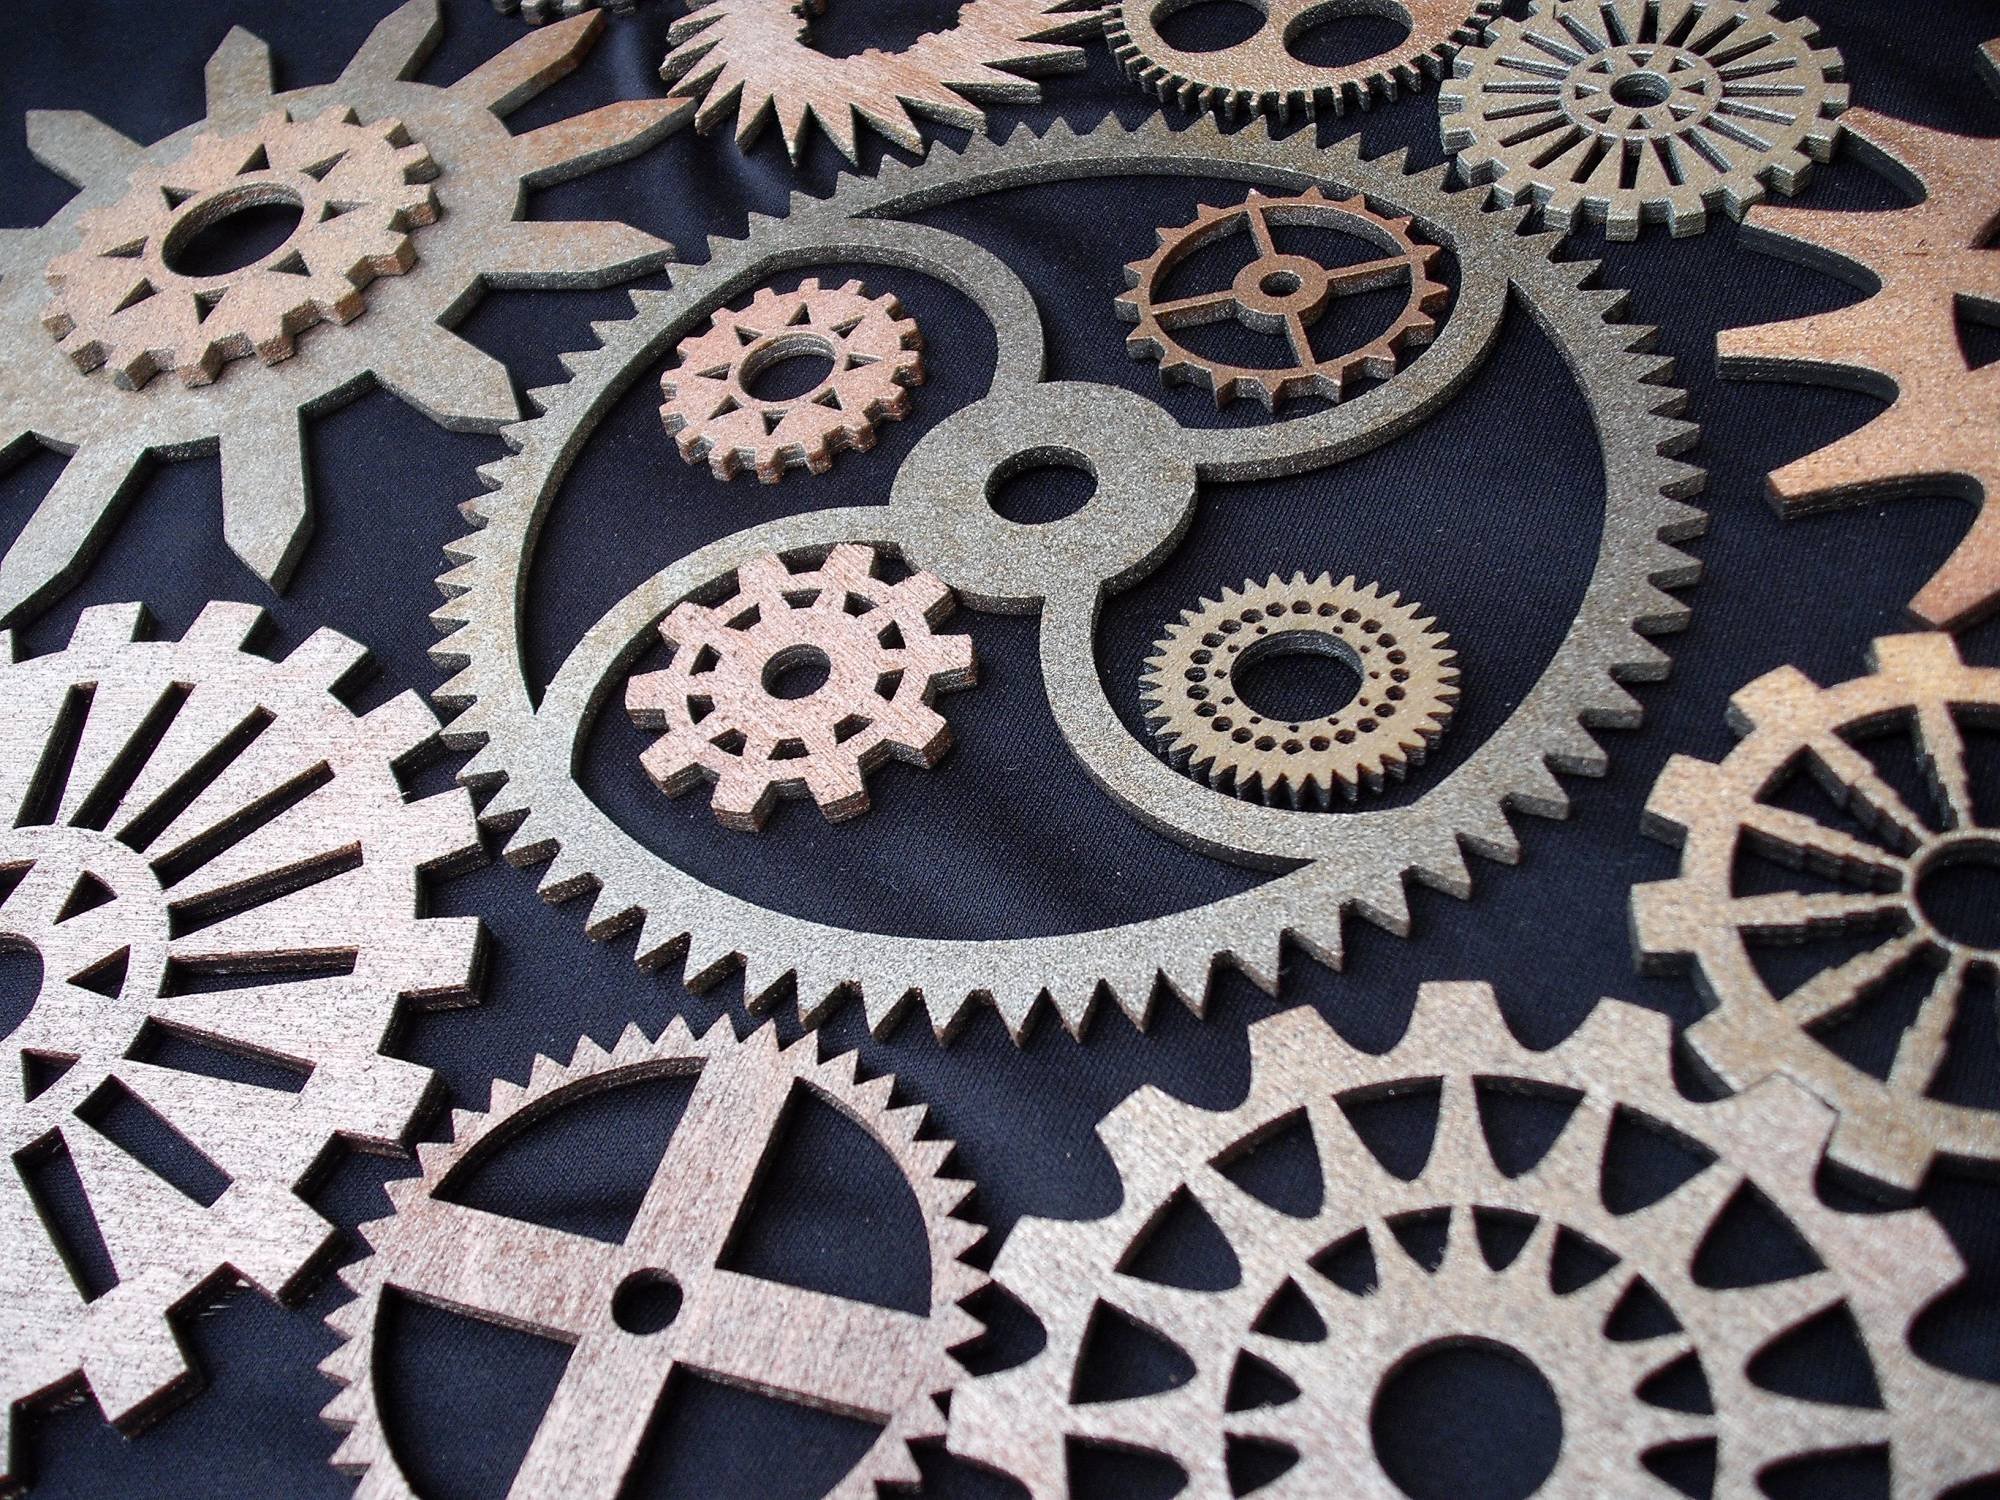 gears, Mechanical, Technics, Metal, Steel, Abstract, Abstraction, Steampunk, Mechanism, Machine, Engineering, Gear Wallpaper